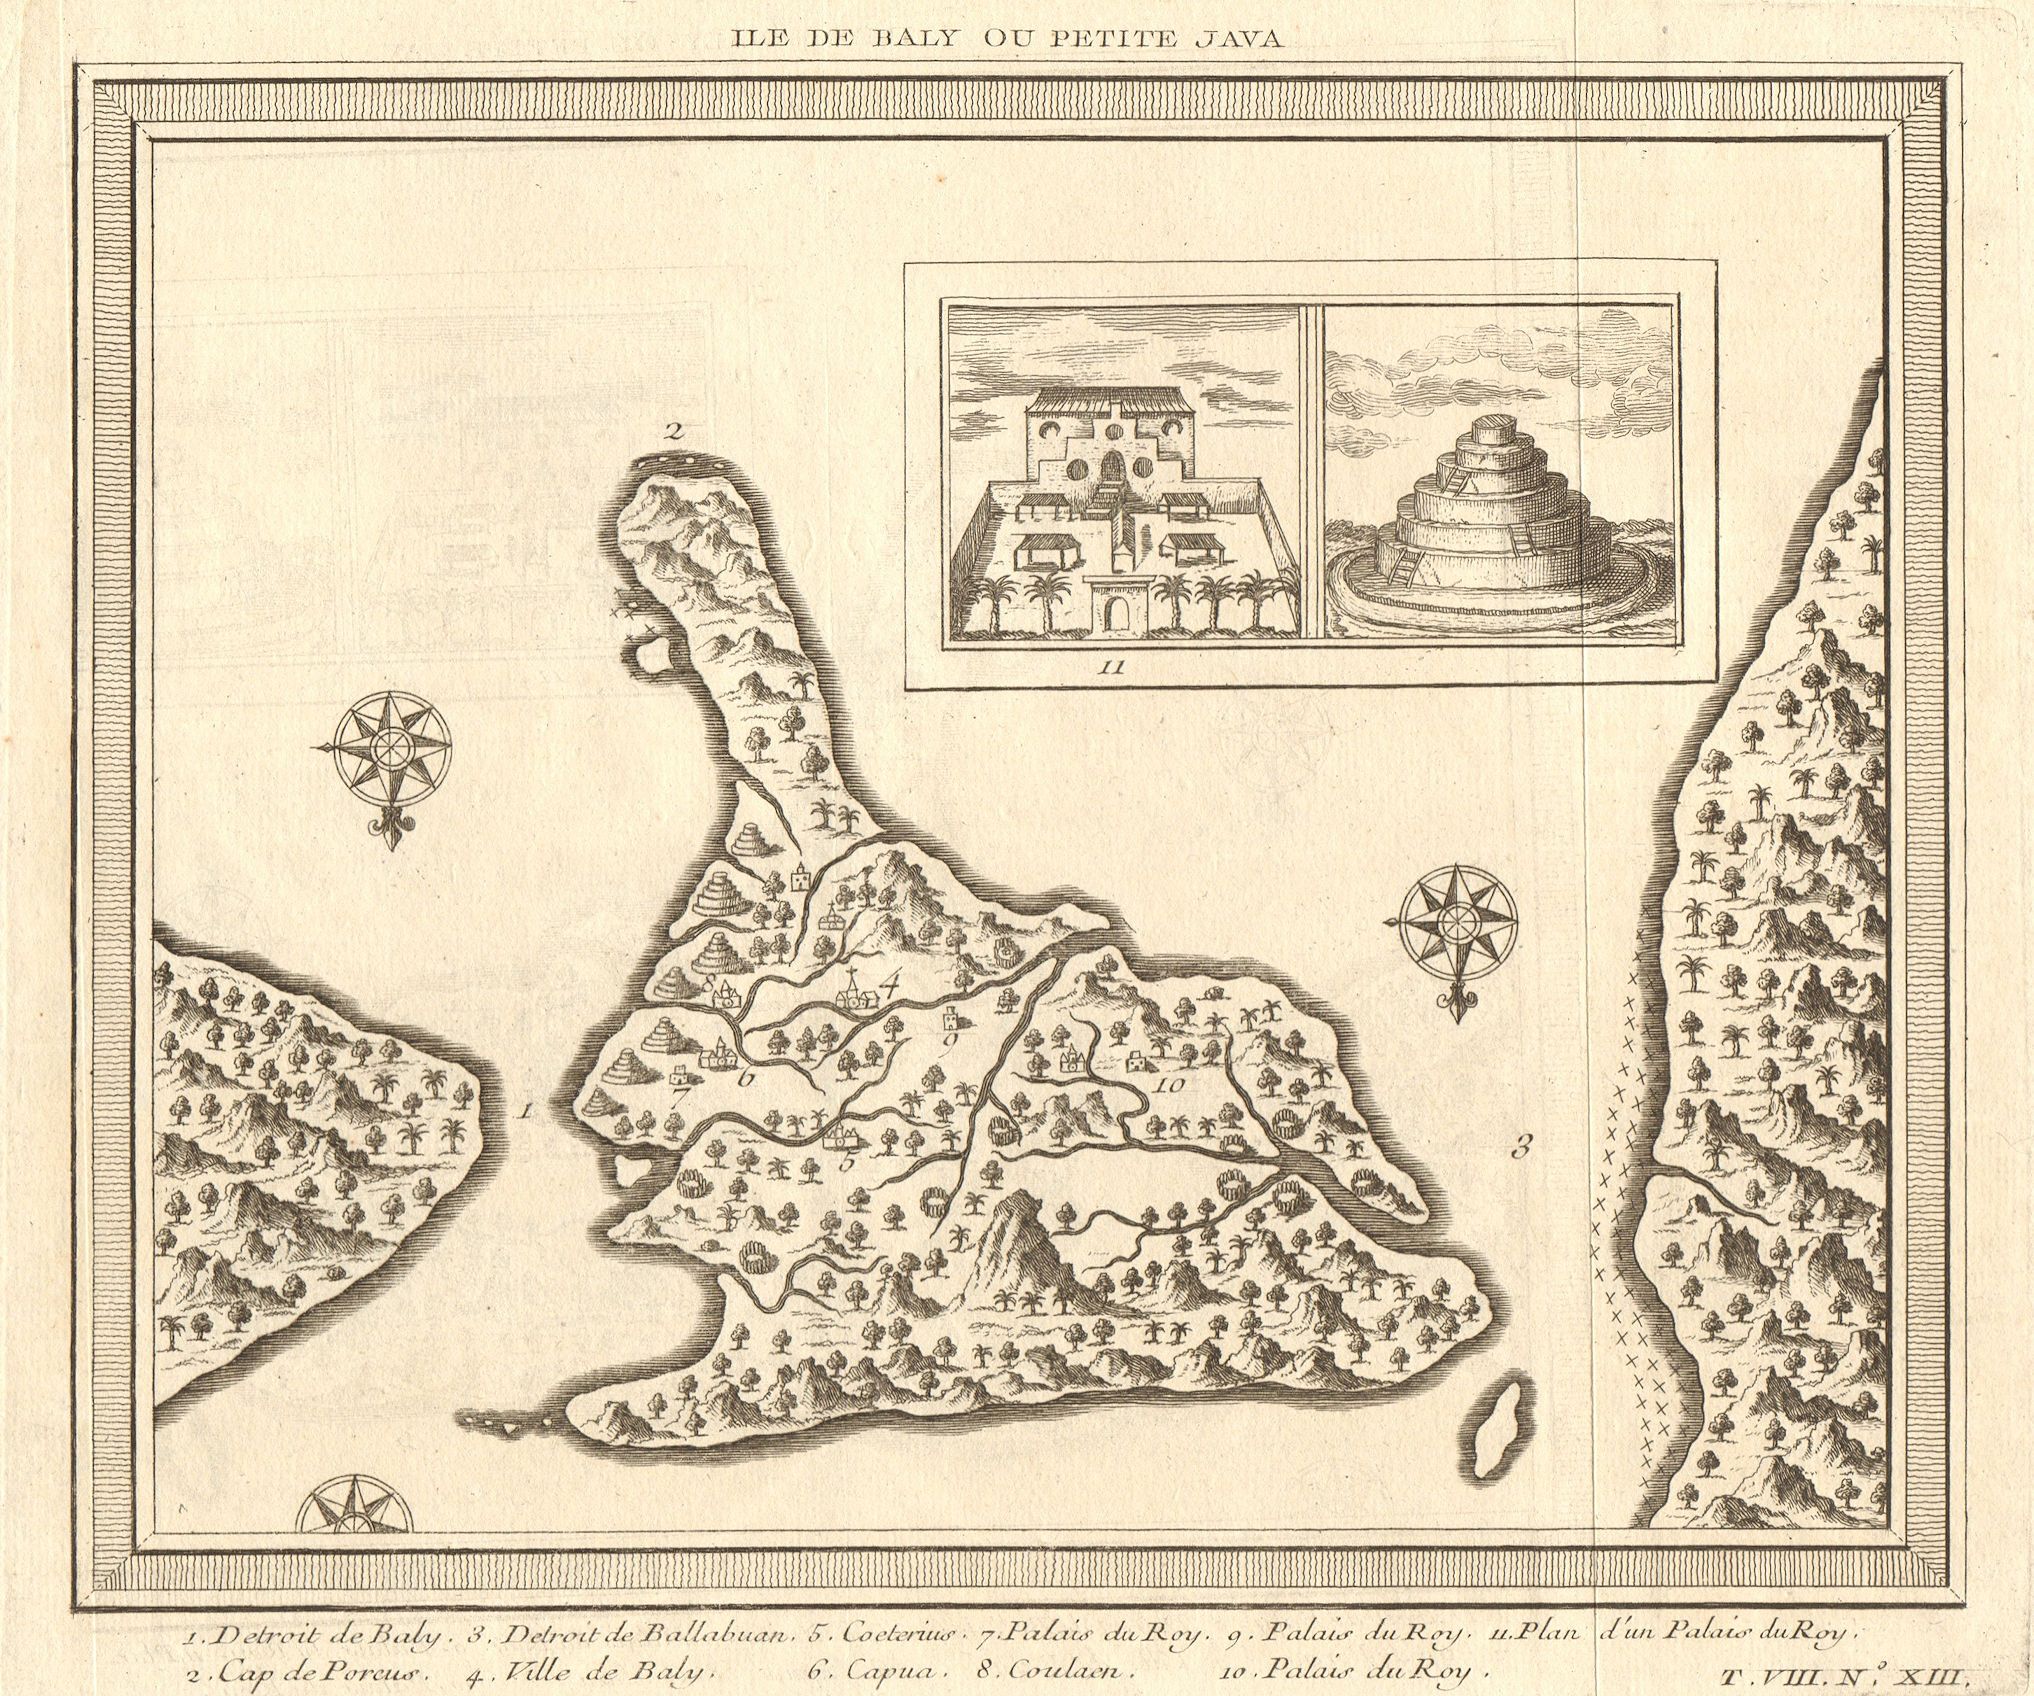 Associate Product 'Ile de Baly ou Petite-Java'. Bali, Indonesia. Royal palace. BELLIN 1750 map